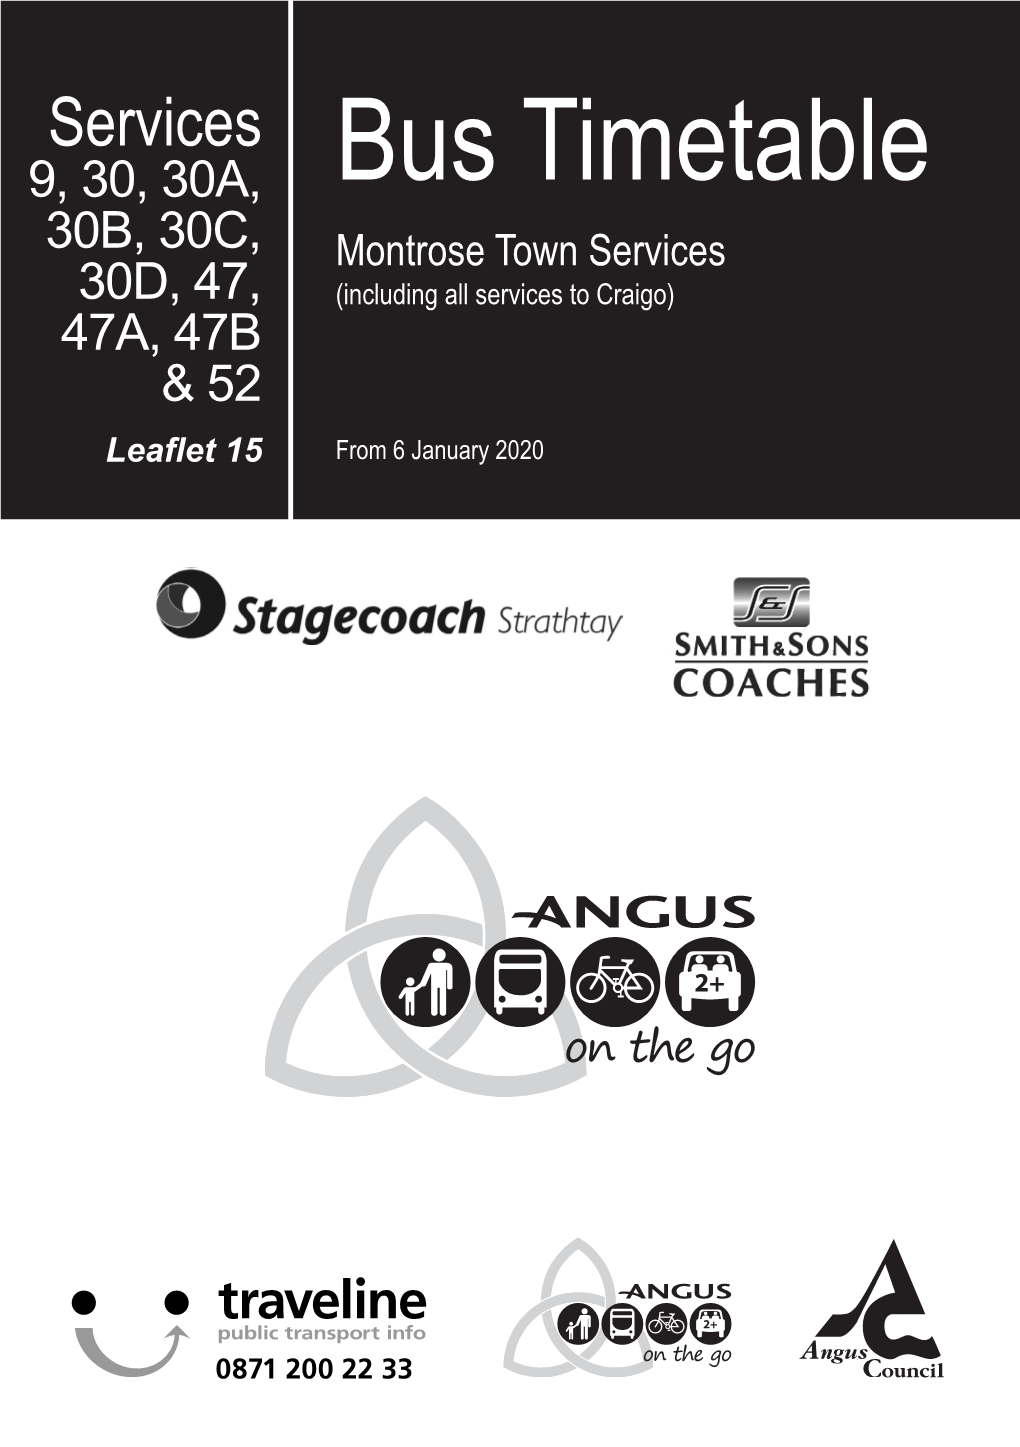 Bus Timetable 30B, 30C, Montrose Town Services 30D, 47, (Including All Services to Craigo)